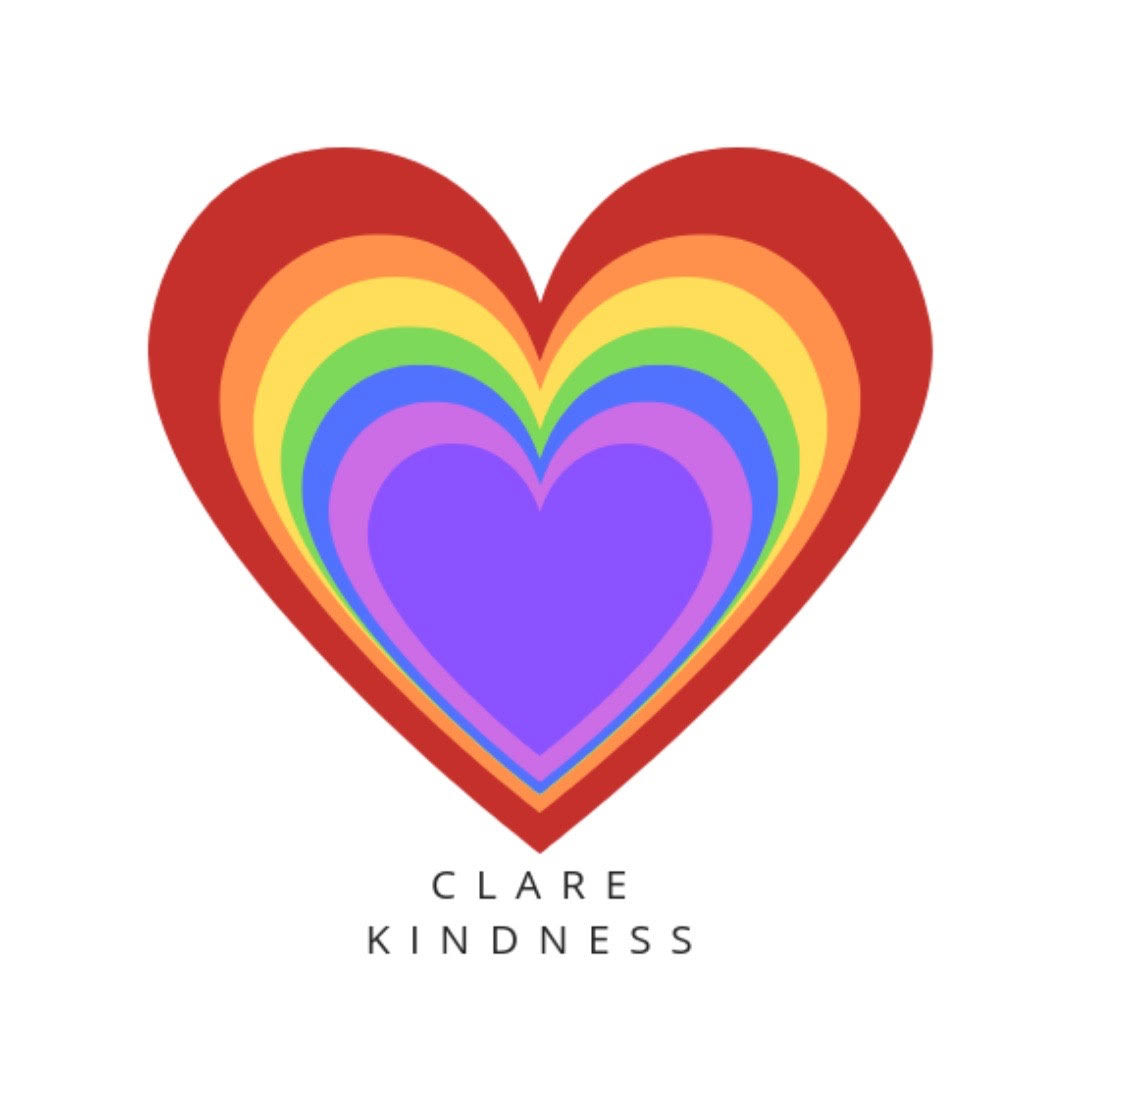 Clare Kindness - Podcast Host & Kindness Coach